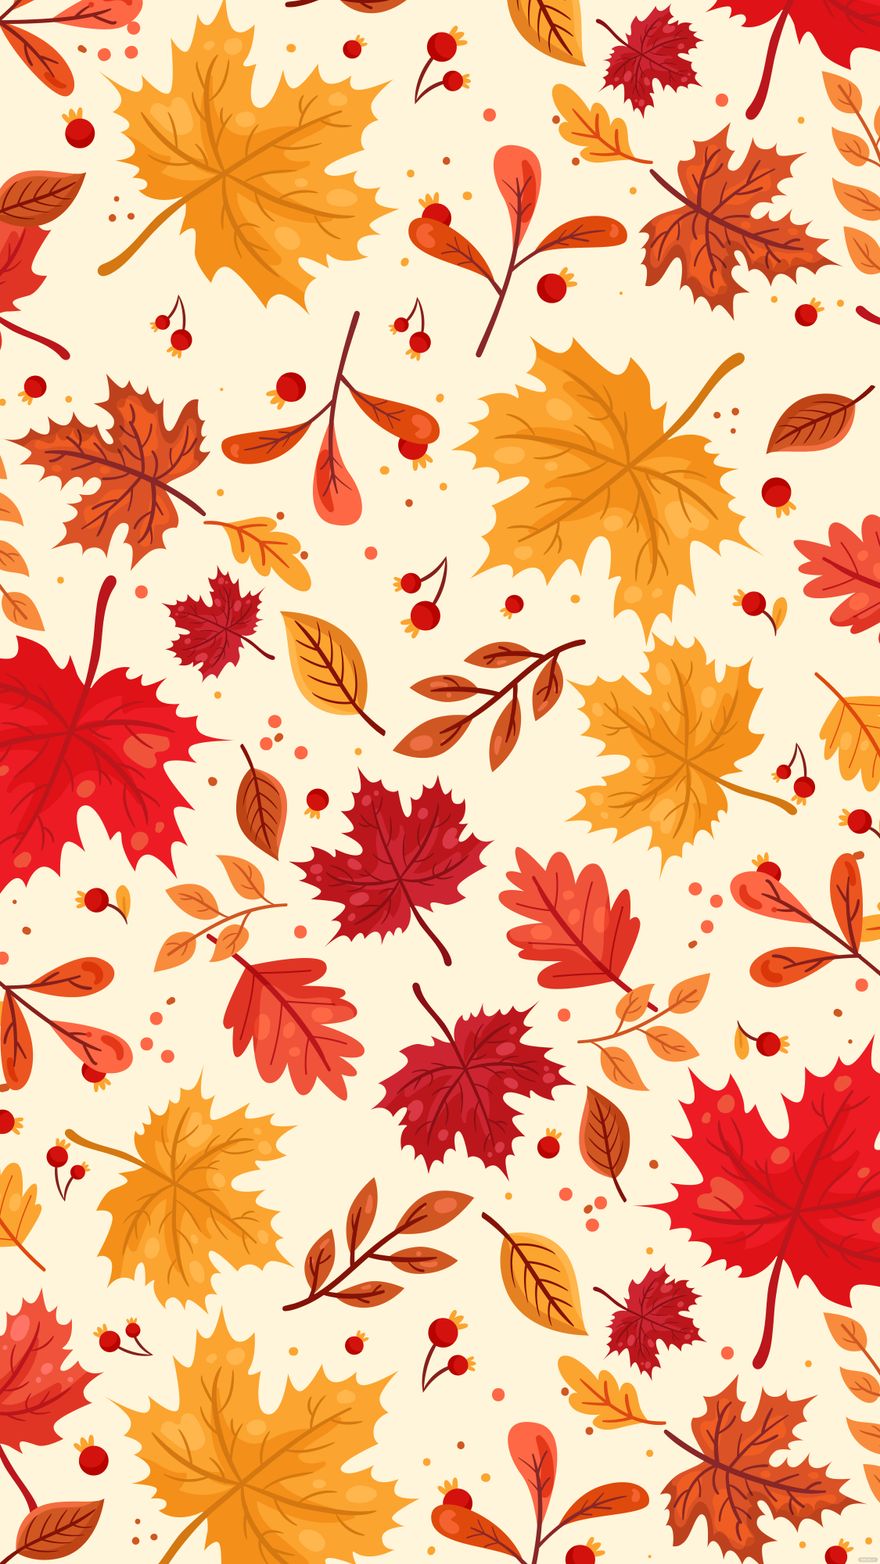 Fall Leaves iPhone Background in Illustrator, EPS, SVG, JPG